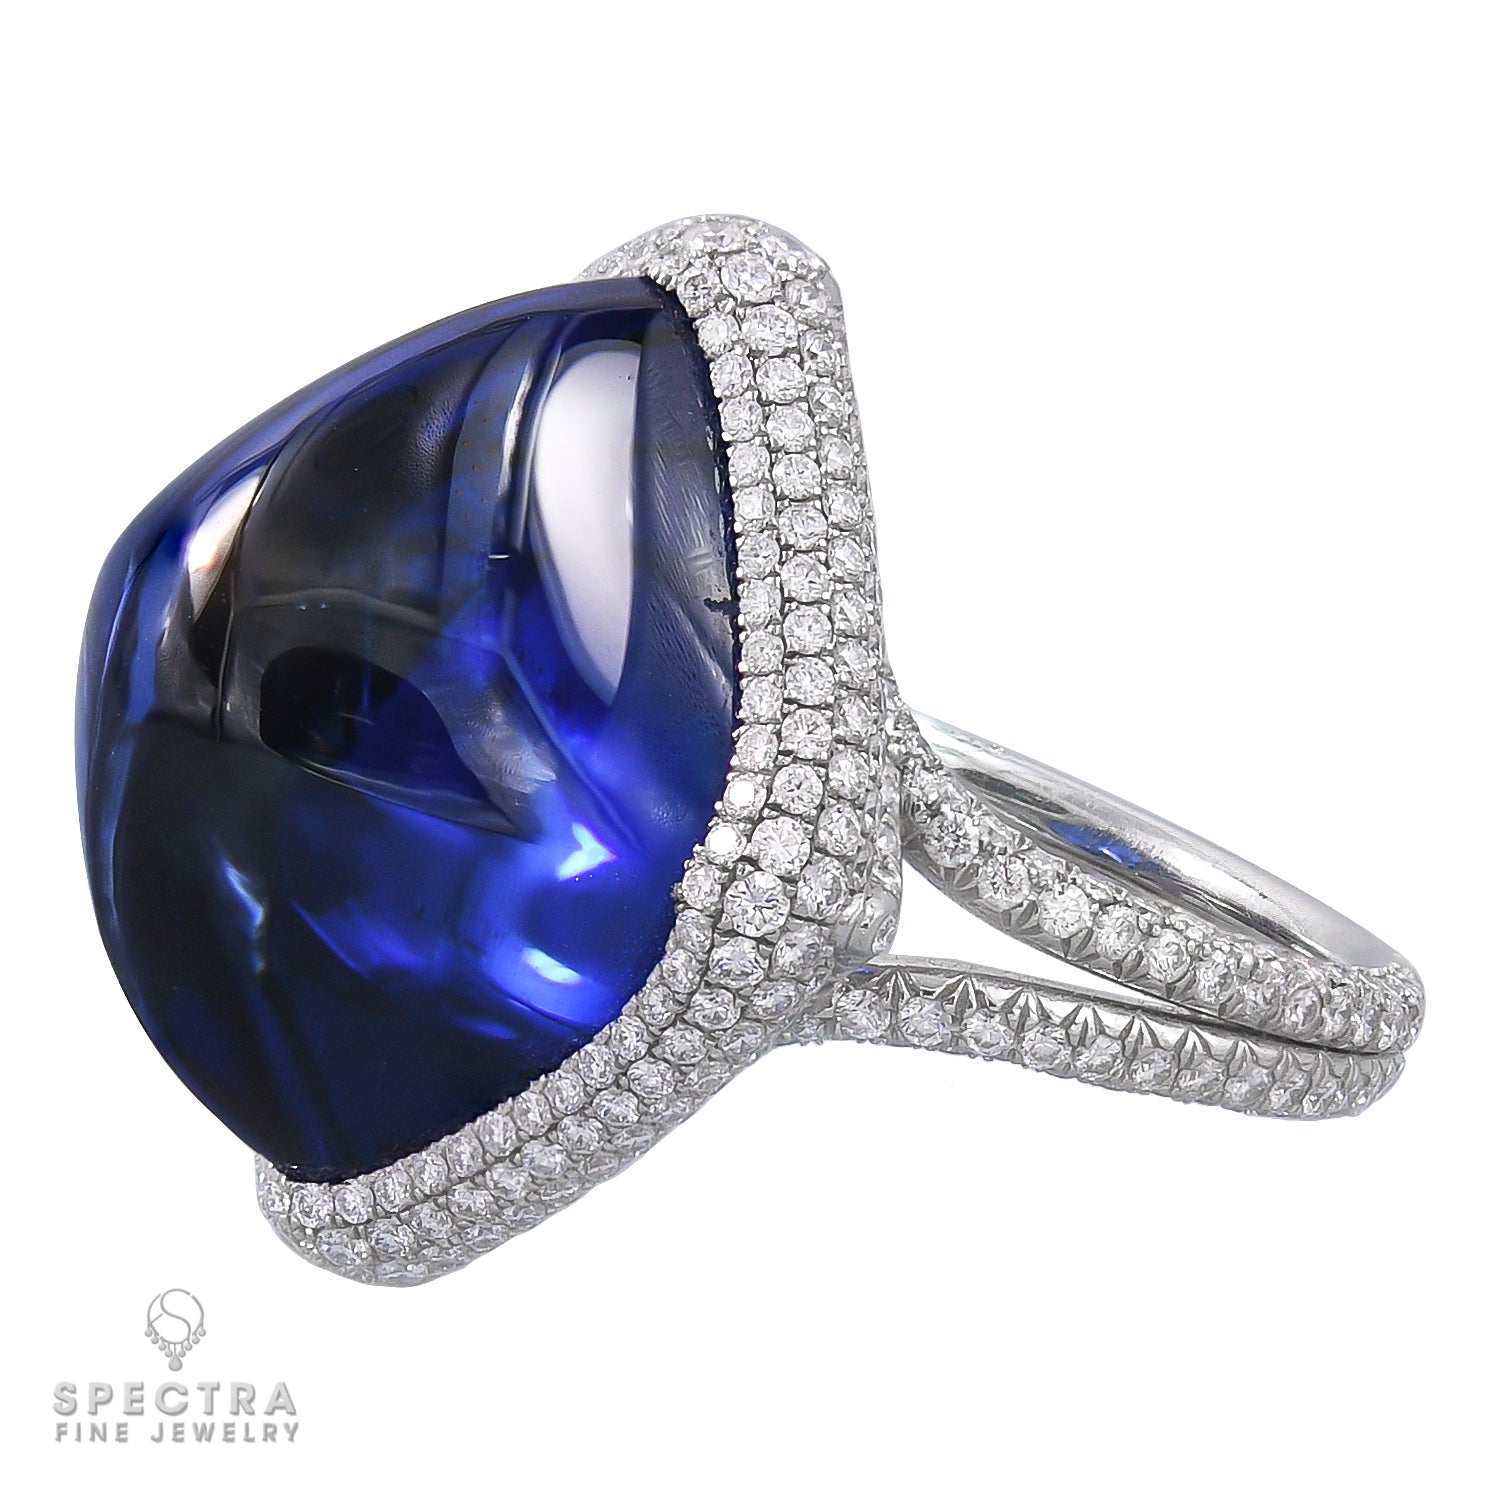 Spectra Fine Jewelry Certified 38.53 Carat Sugarloaf Sapphire Diamond Ring